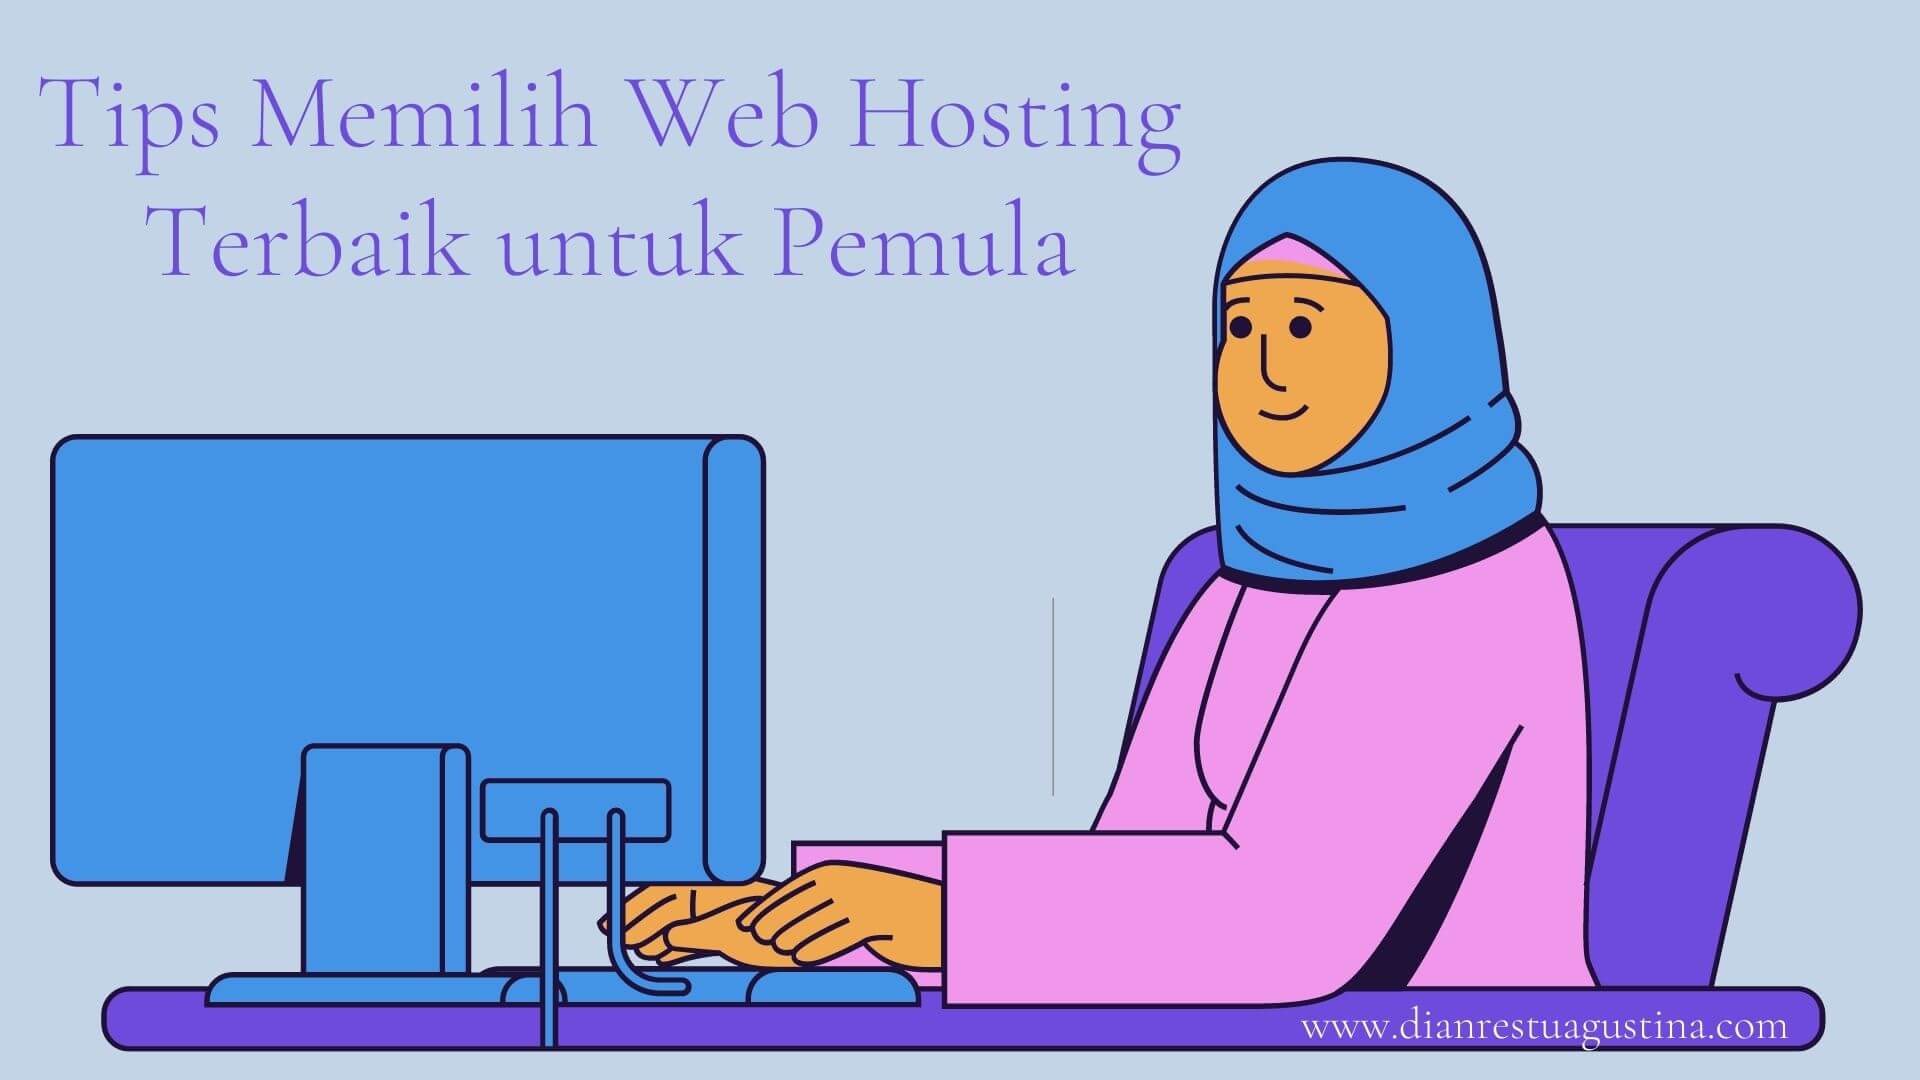 Tips memilih web hosting terbaik untuk pemula